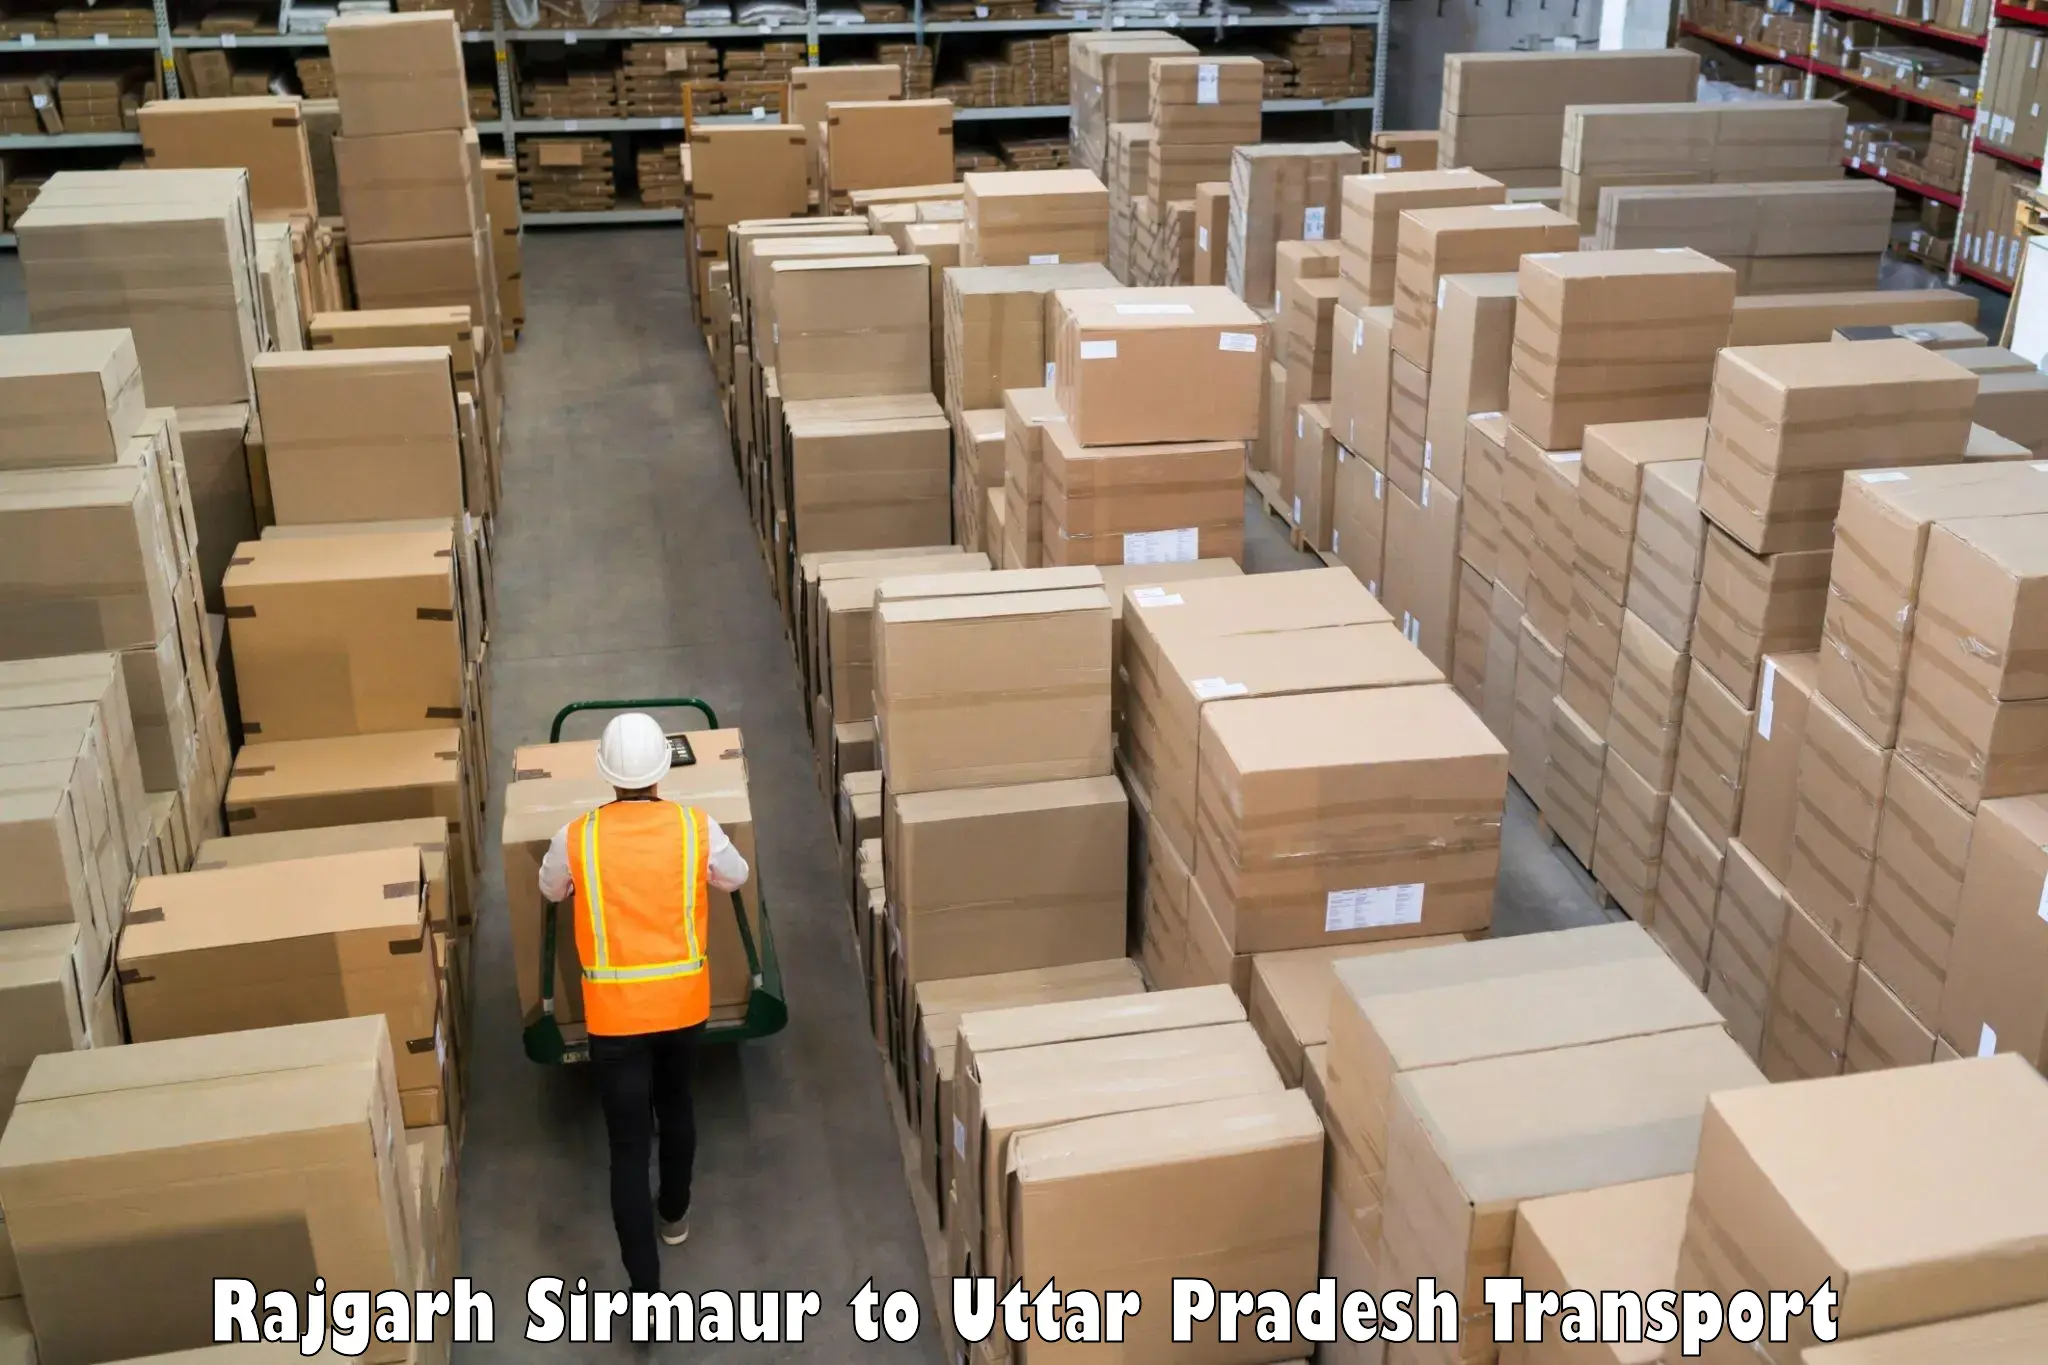 Part load transport service in India Rajgarh Sirmaur to Dataganj